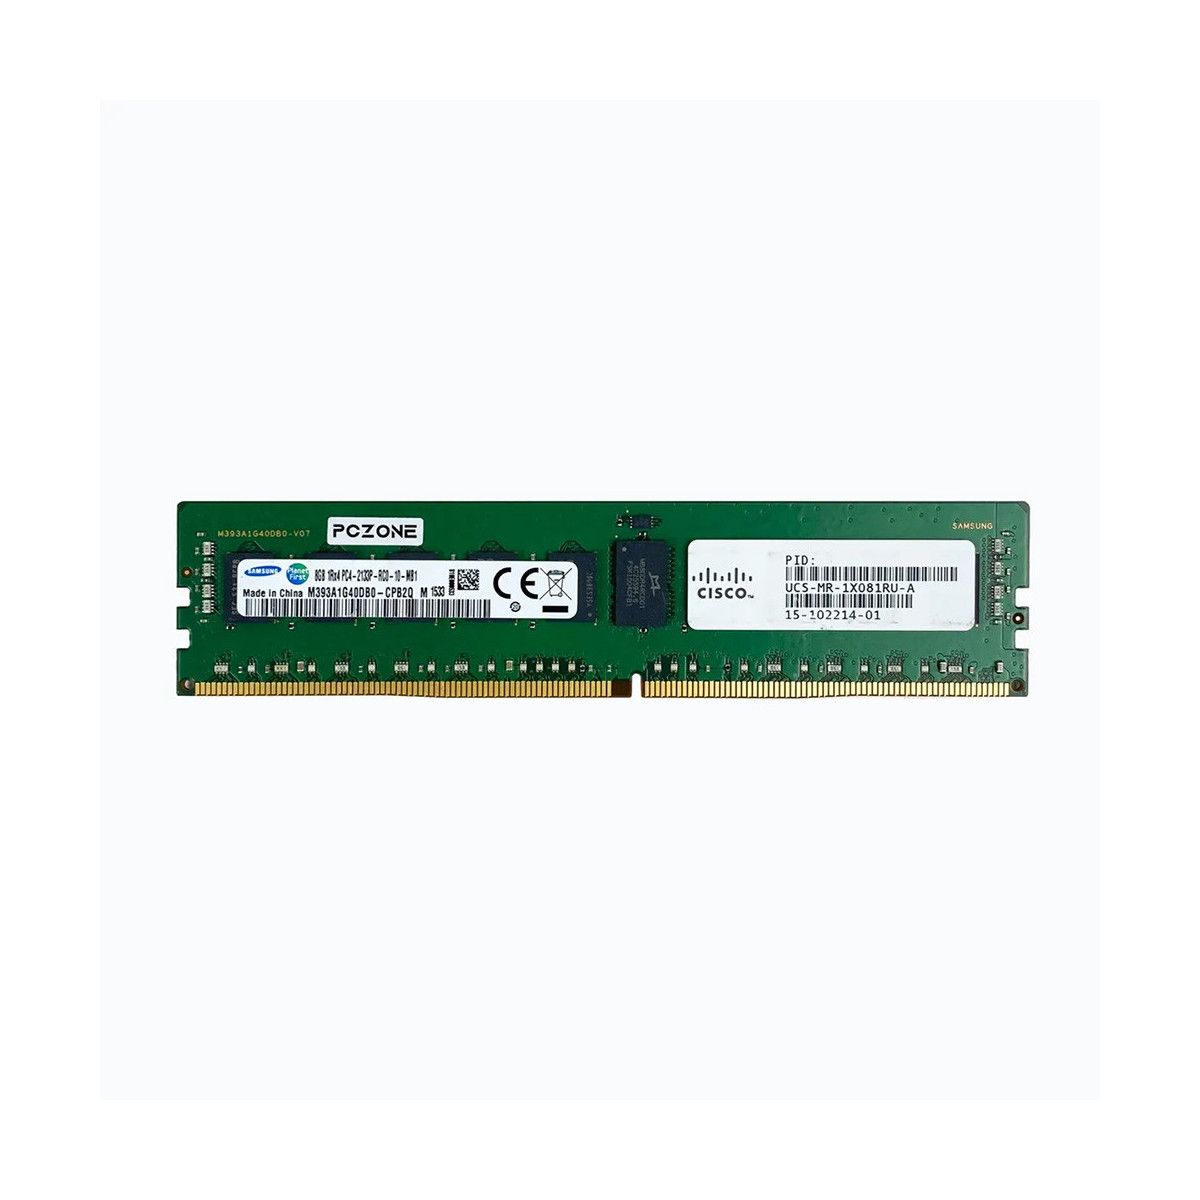 7110308-MS - Memstar 1x 8GB DDR4-2133 RDIMM PC4-17000P-R - Mem-Star OEM Mémoire compatible 1 - Memstar 